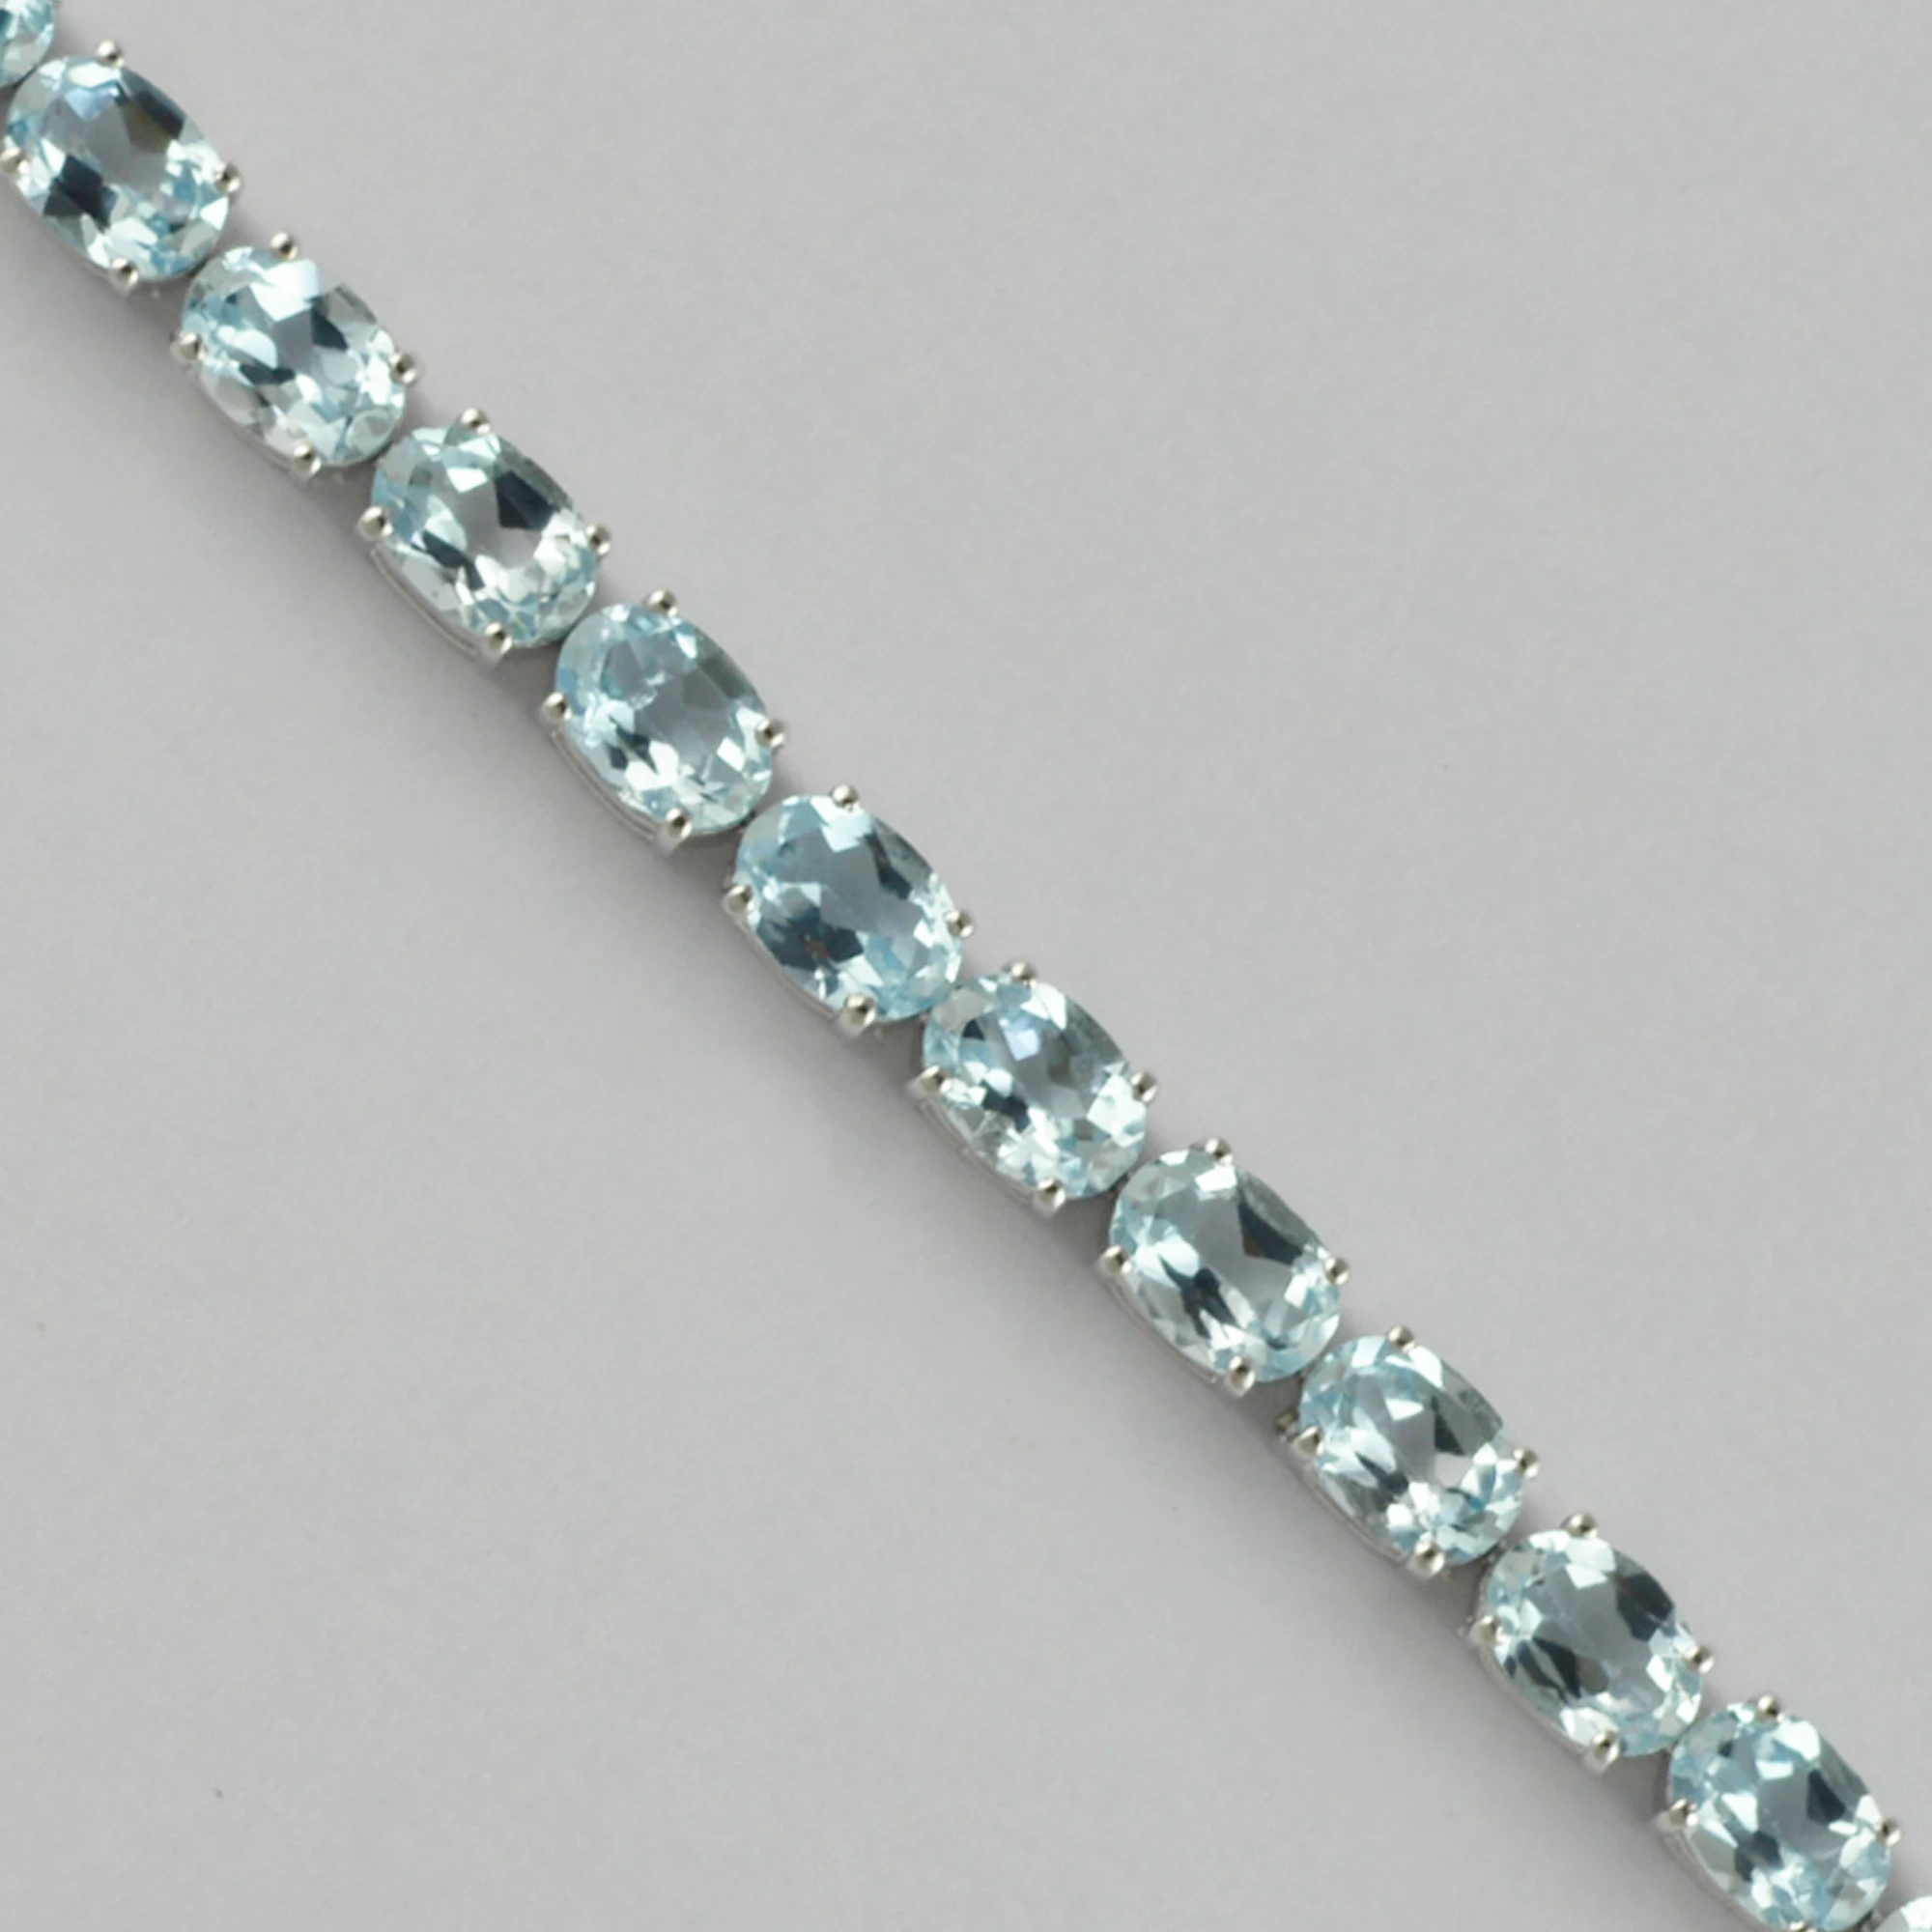 Solid 925 sterling silver natural blue topaz gemstone bracelet jewelry statement bracelet wholesale gemstone handmade bracelet